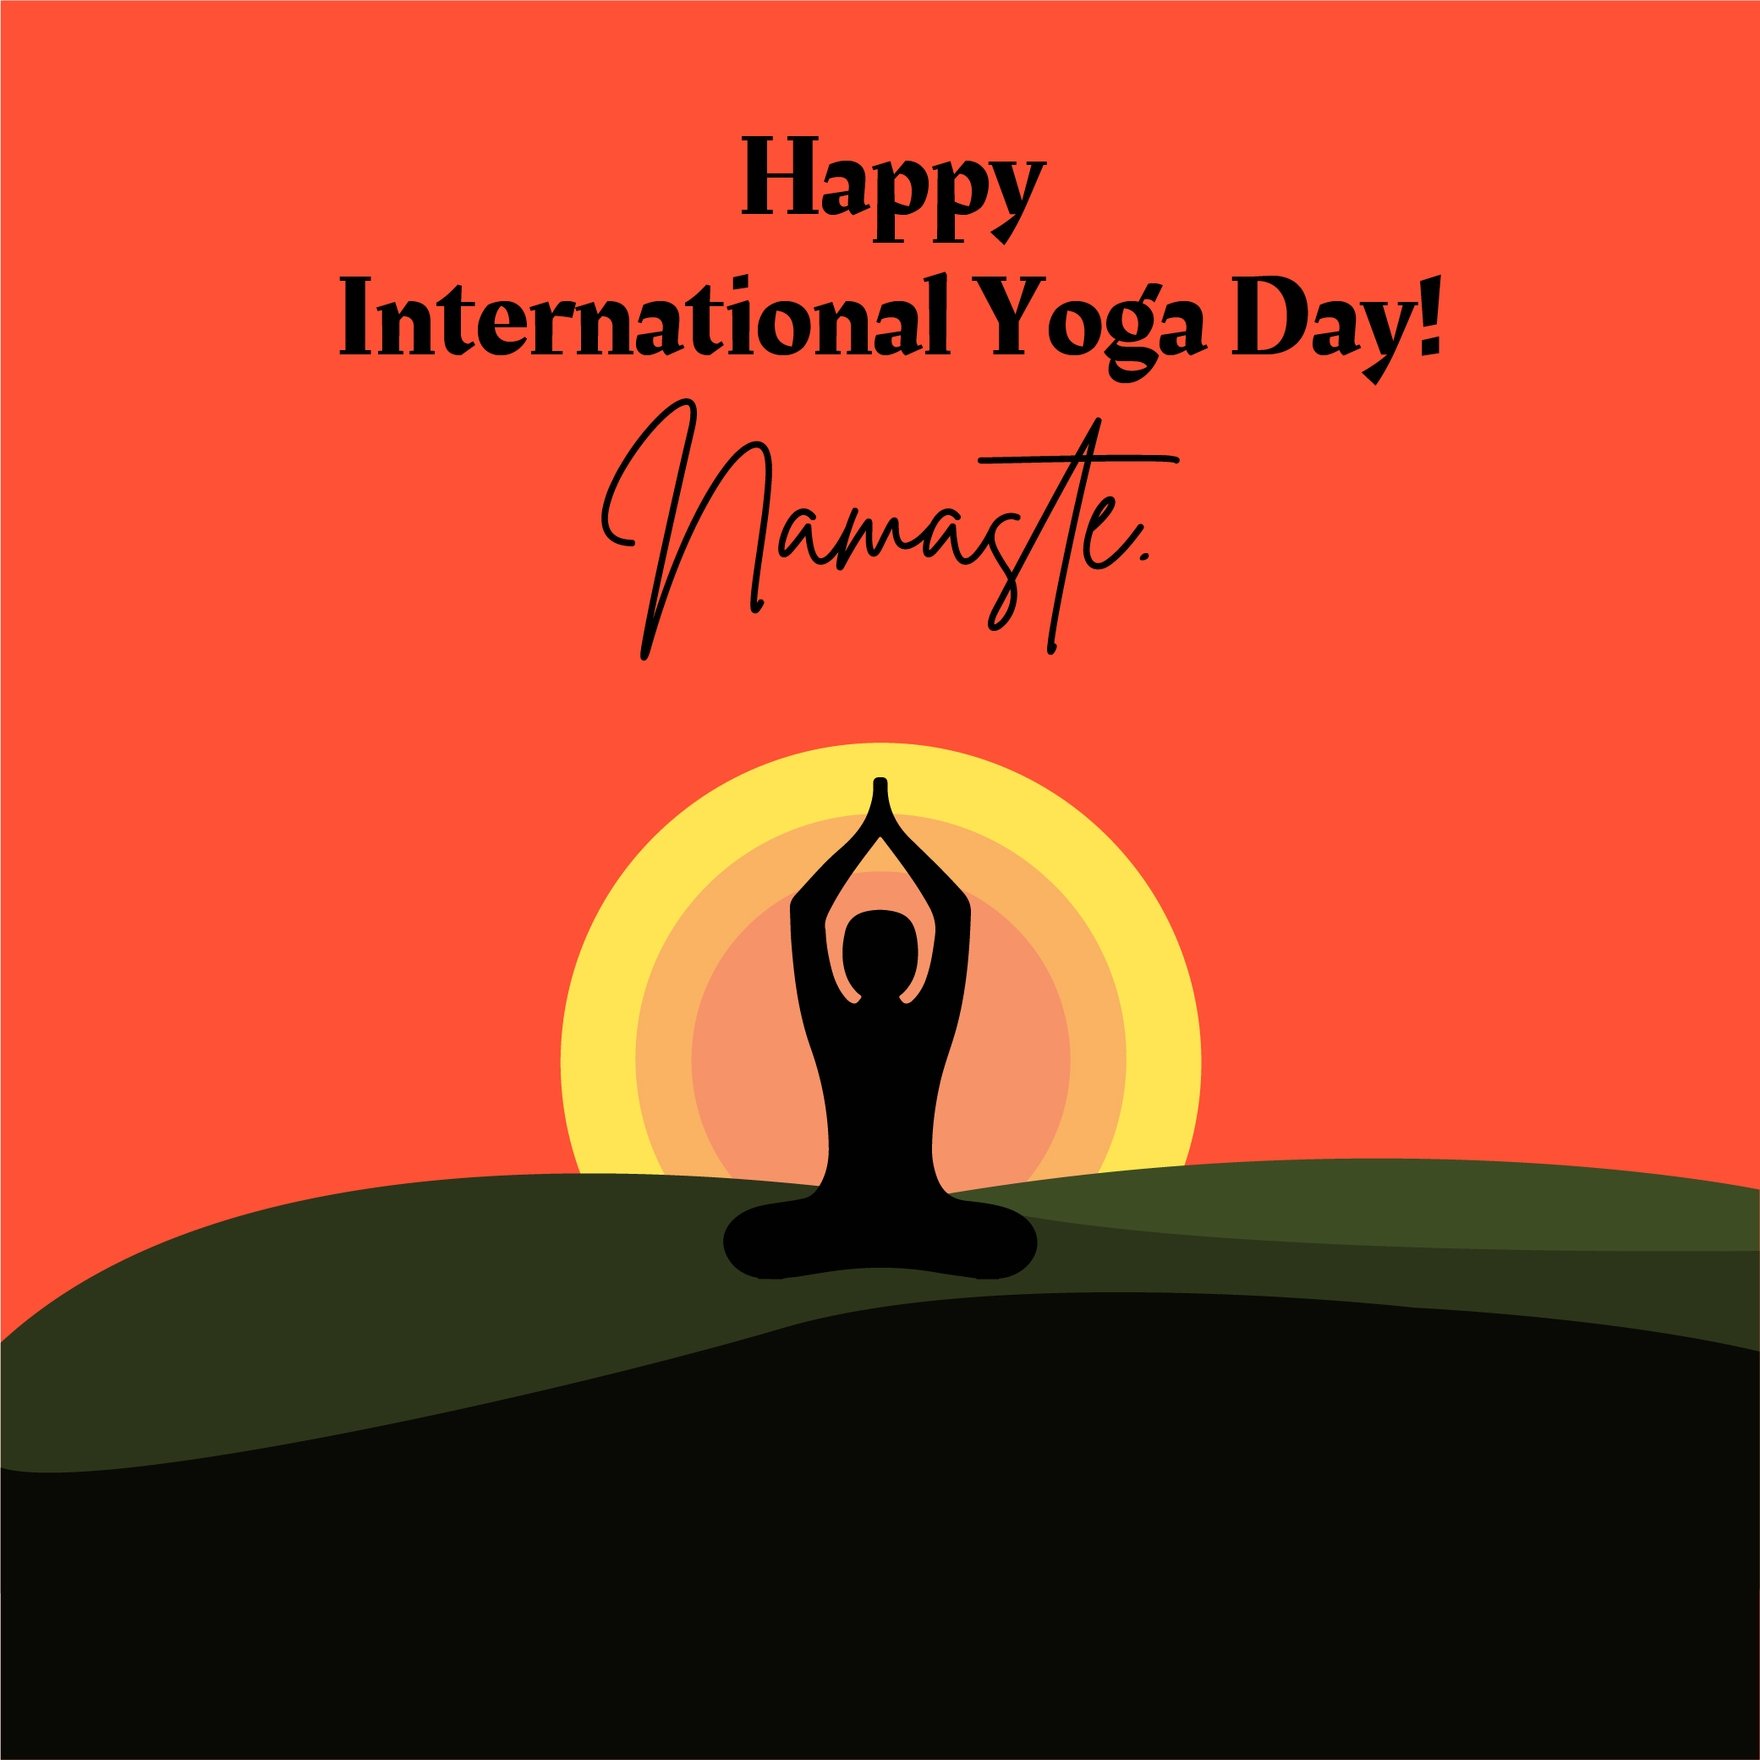 International Yoga Day Wishes Vector in Illustrator, PSD, EPS, SVG, JPG, PNG